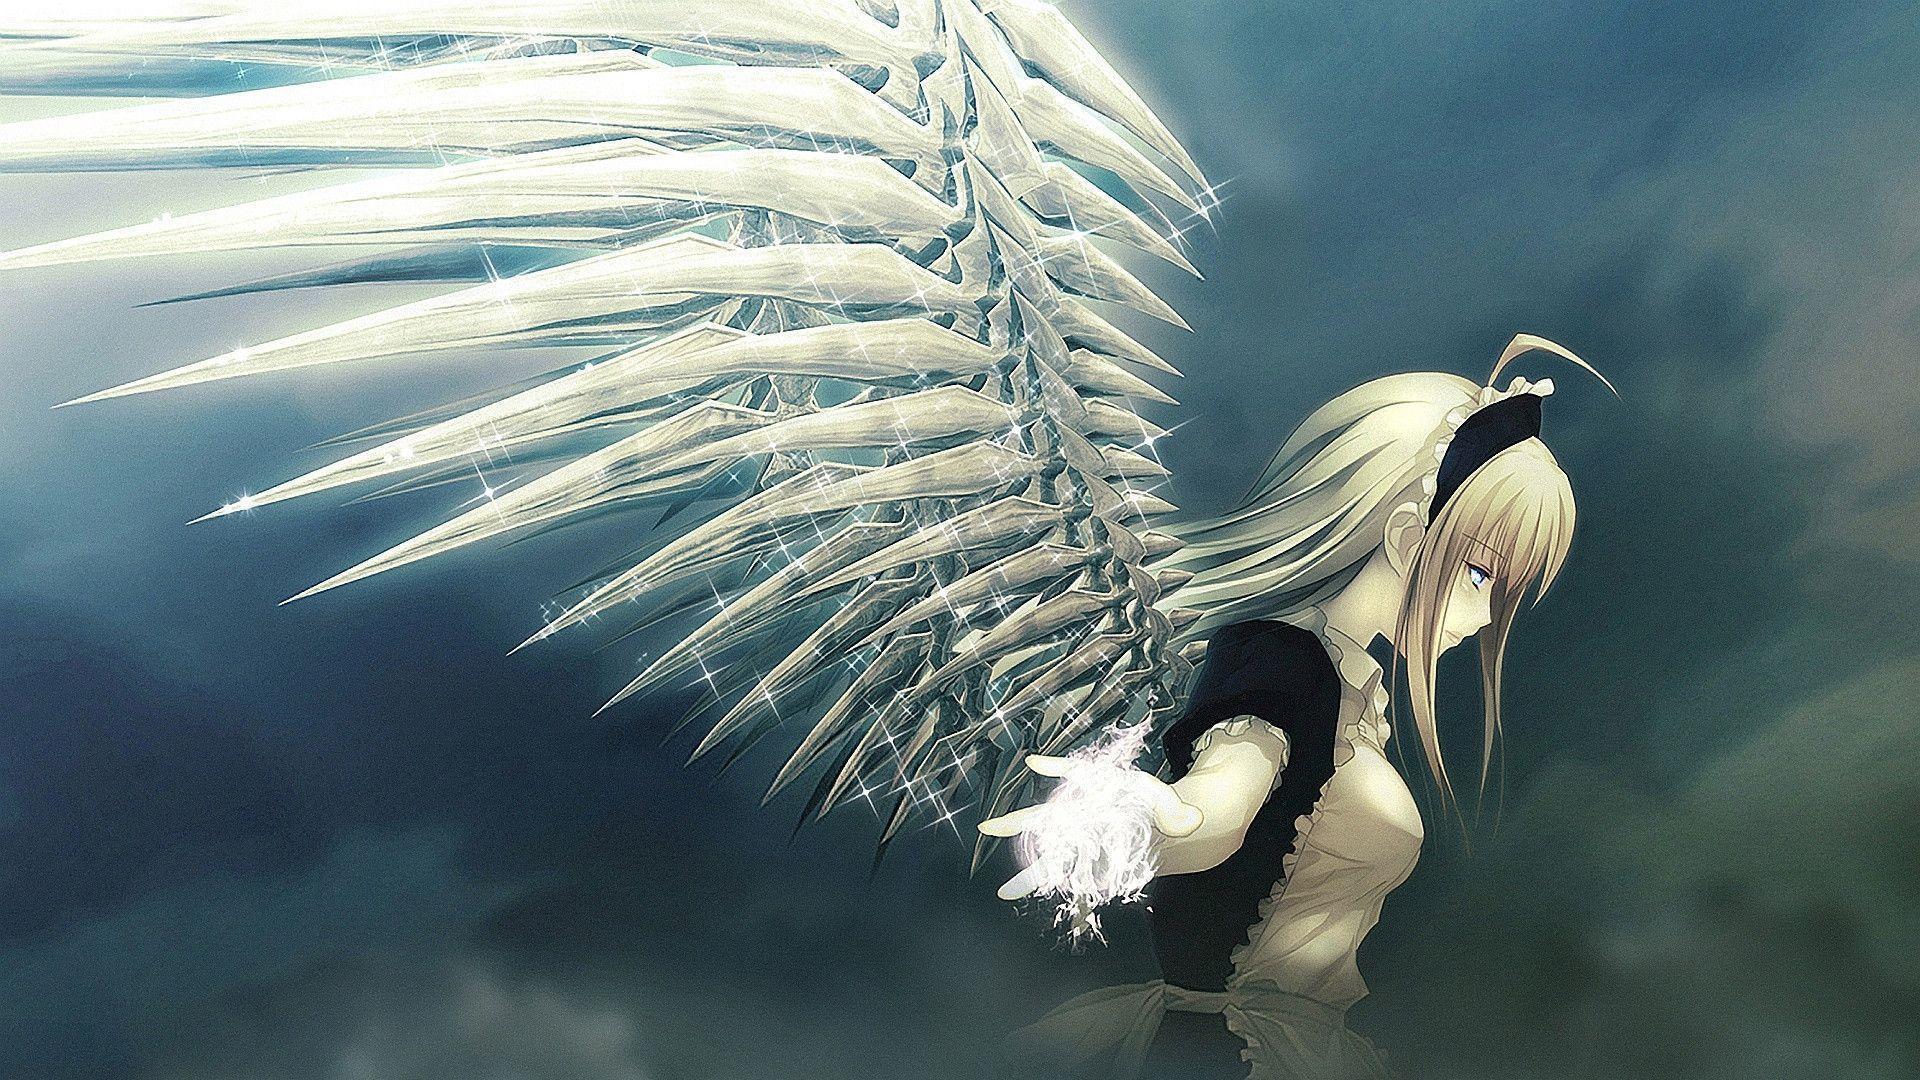 Anime Angels Wallpaper